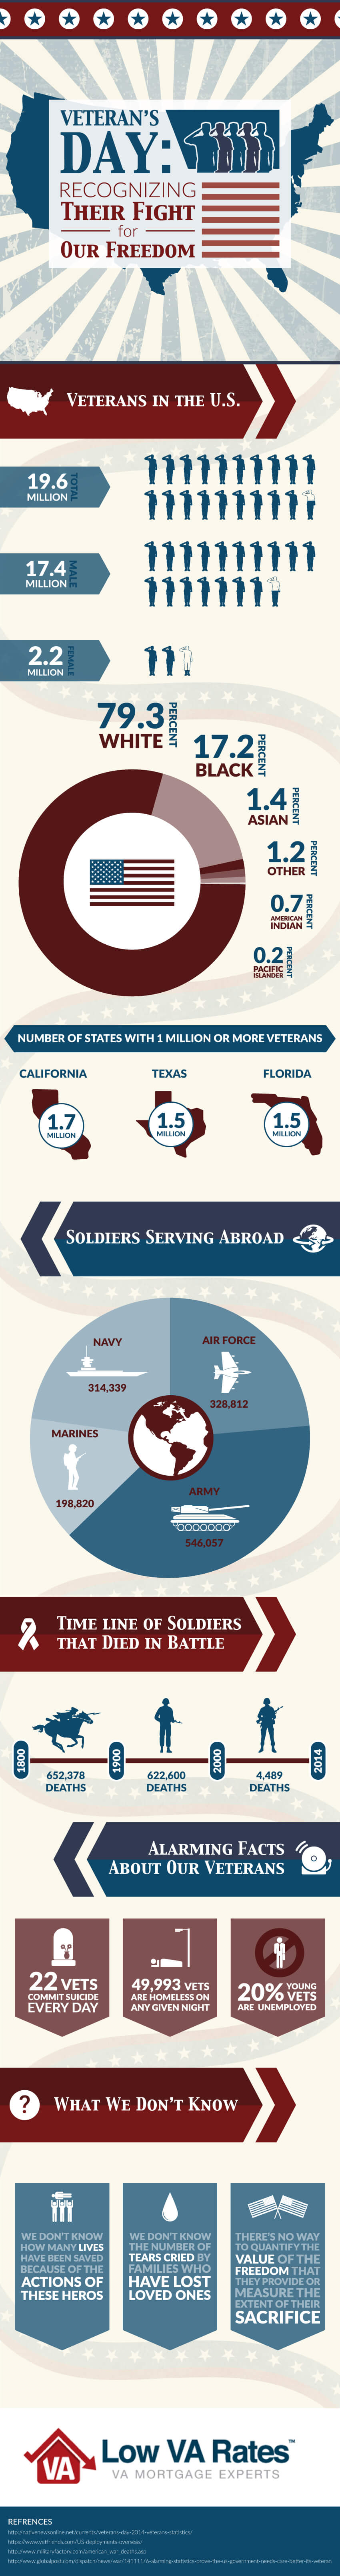 Veterans-Day-Infographic-2015